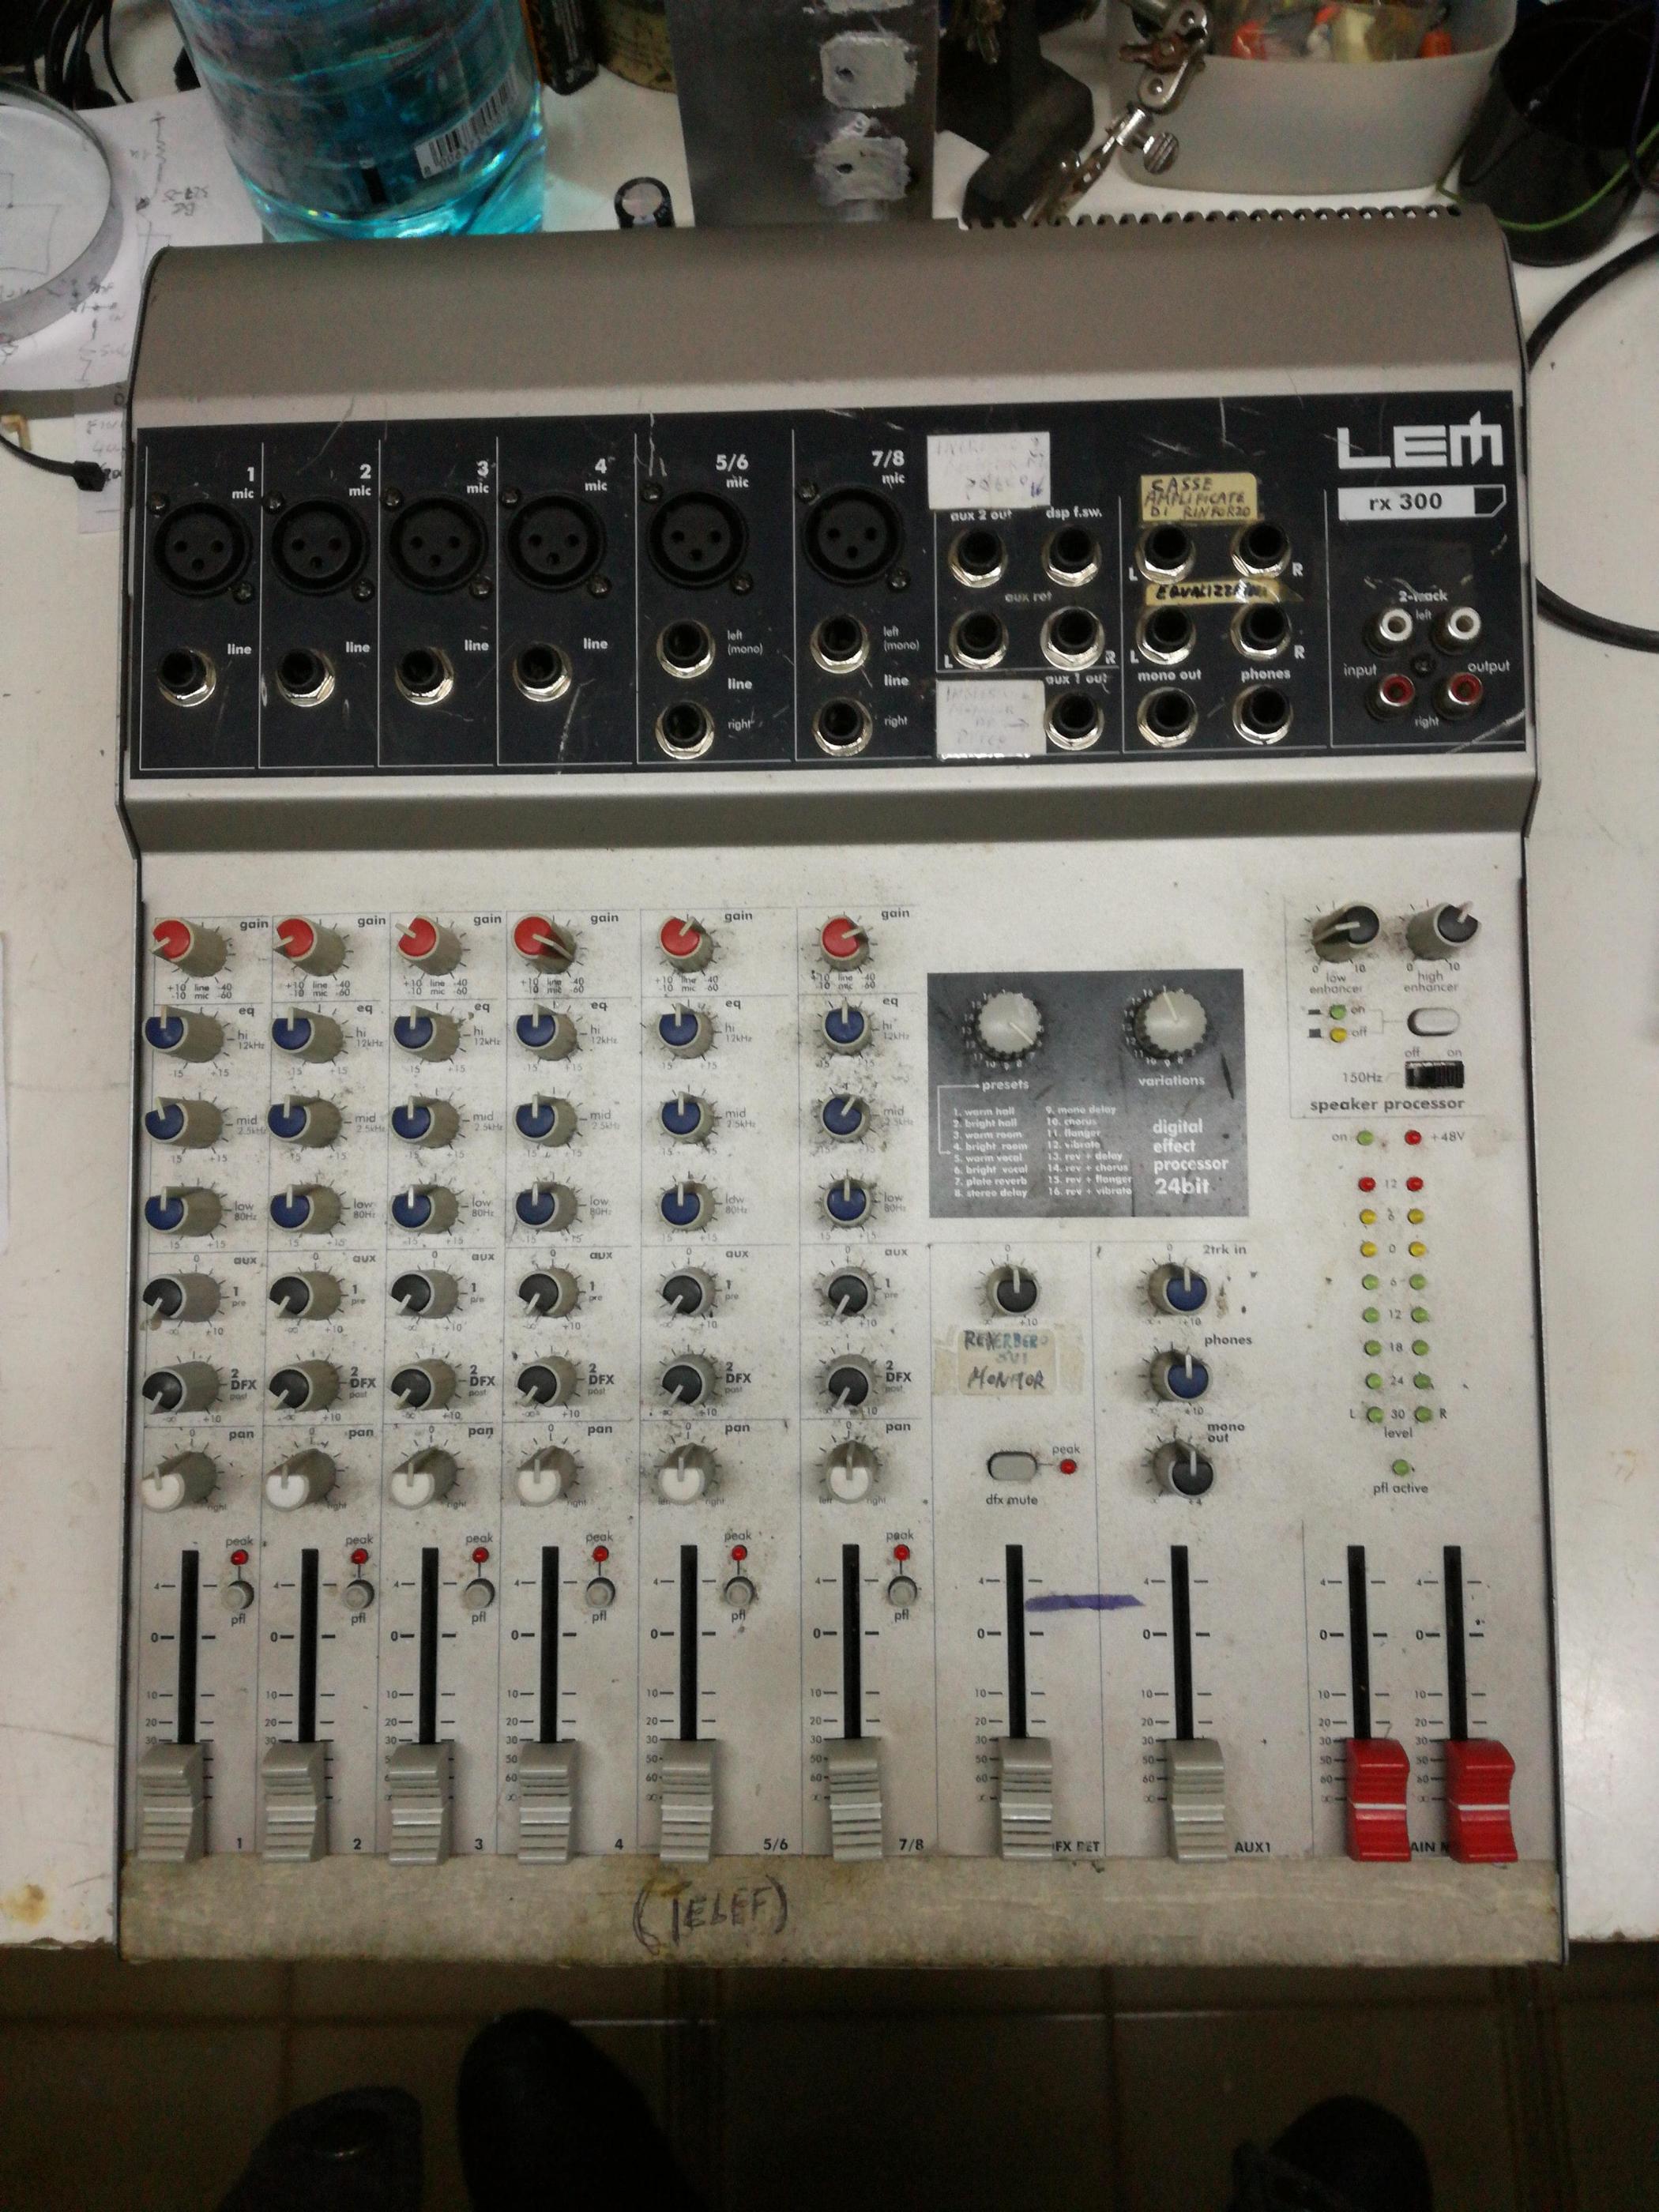 Wiring diagram or service manul LEM RX300 amplified audio mixer | diyAudio